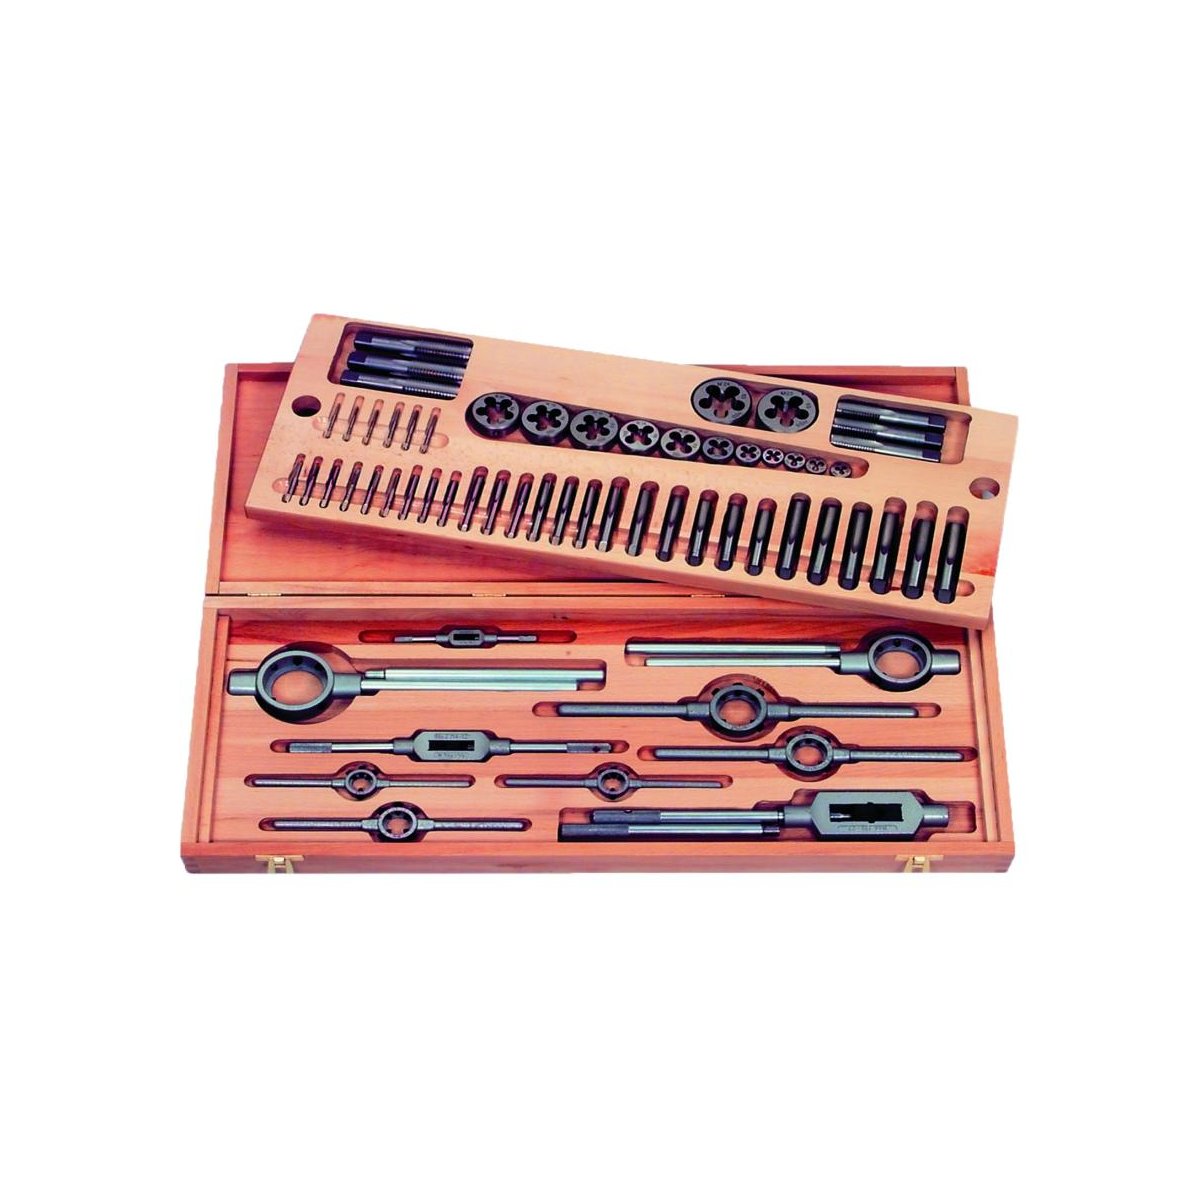 Набор резьбонарезного инструмента No 6006Mf HSS, 38 пр., Mf 6 x 0.75 - 24 x 1.5, деревянный кейс